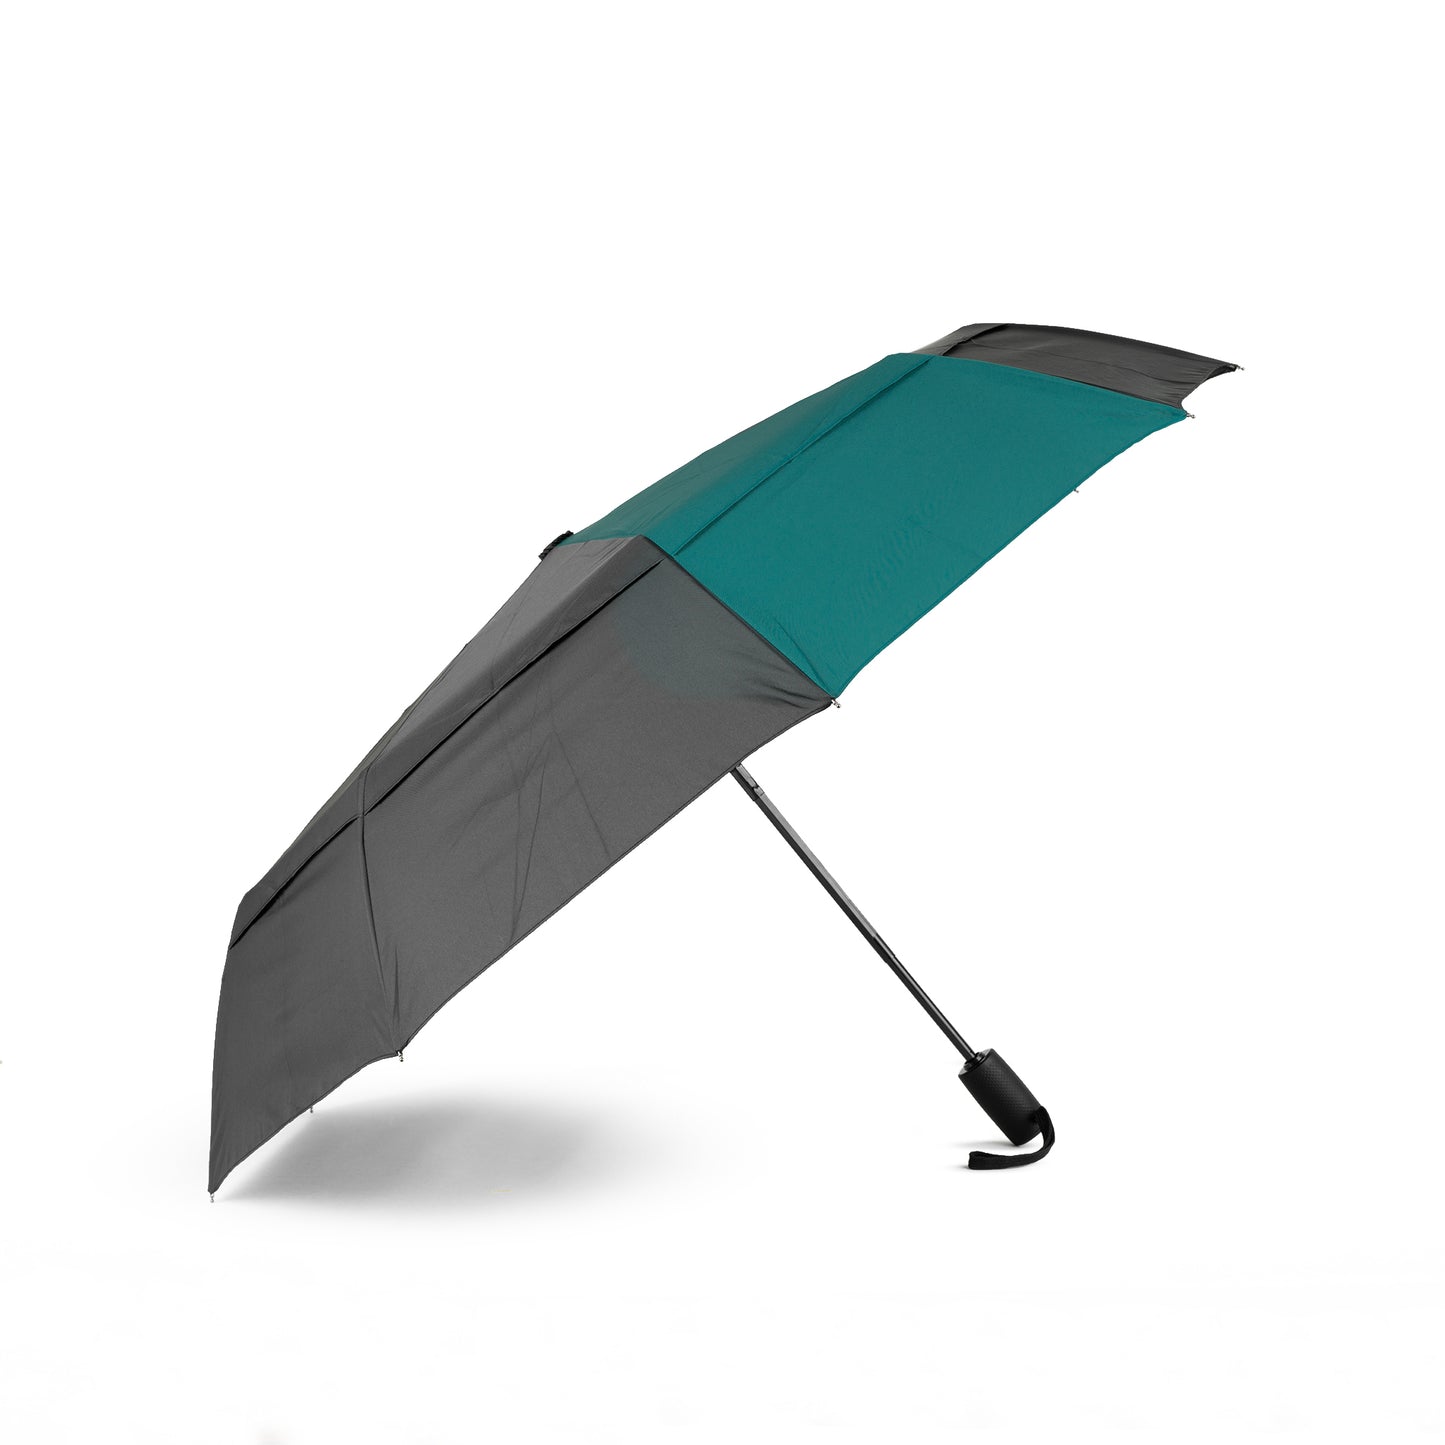 Roka London Waterloo Sustainable Umbrella, Black & Teal